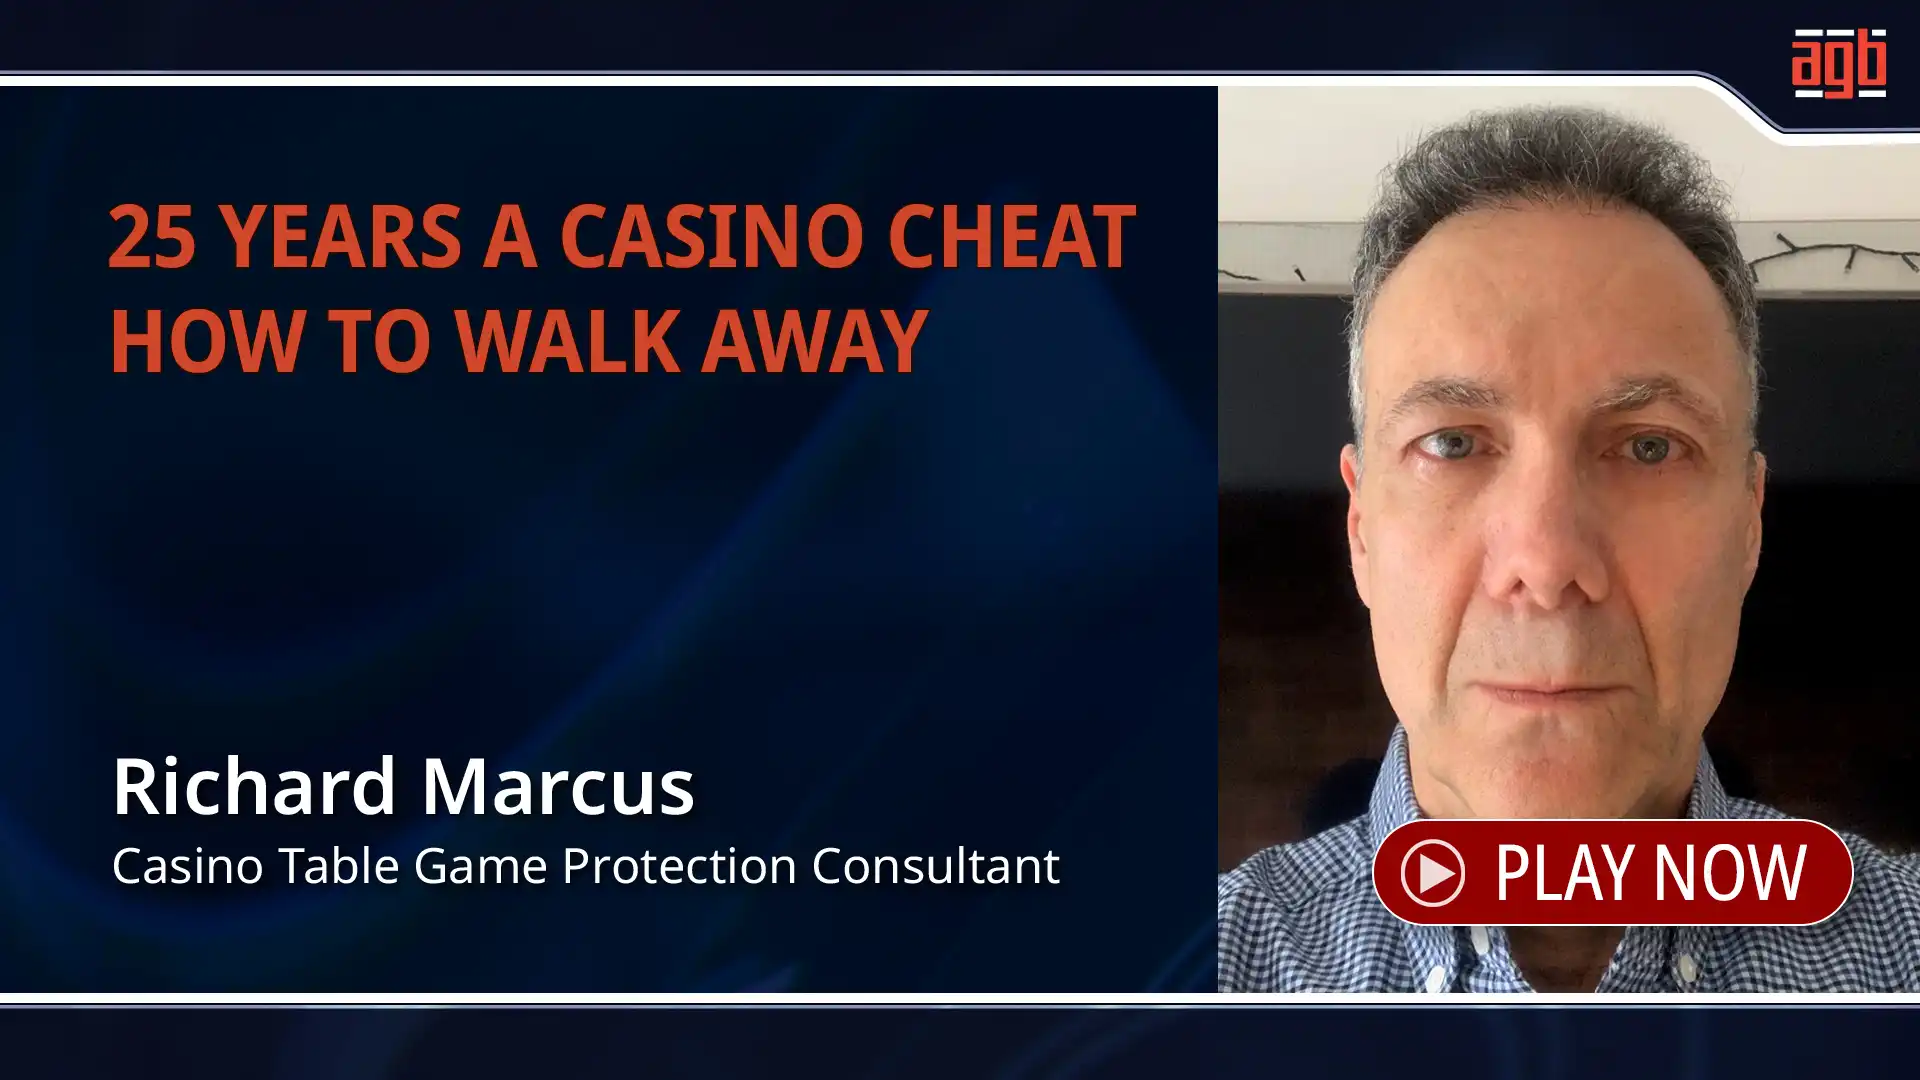 Richard Marcus, 25 years a casino cheat, how to walk away.